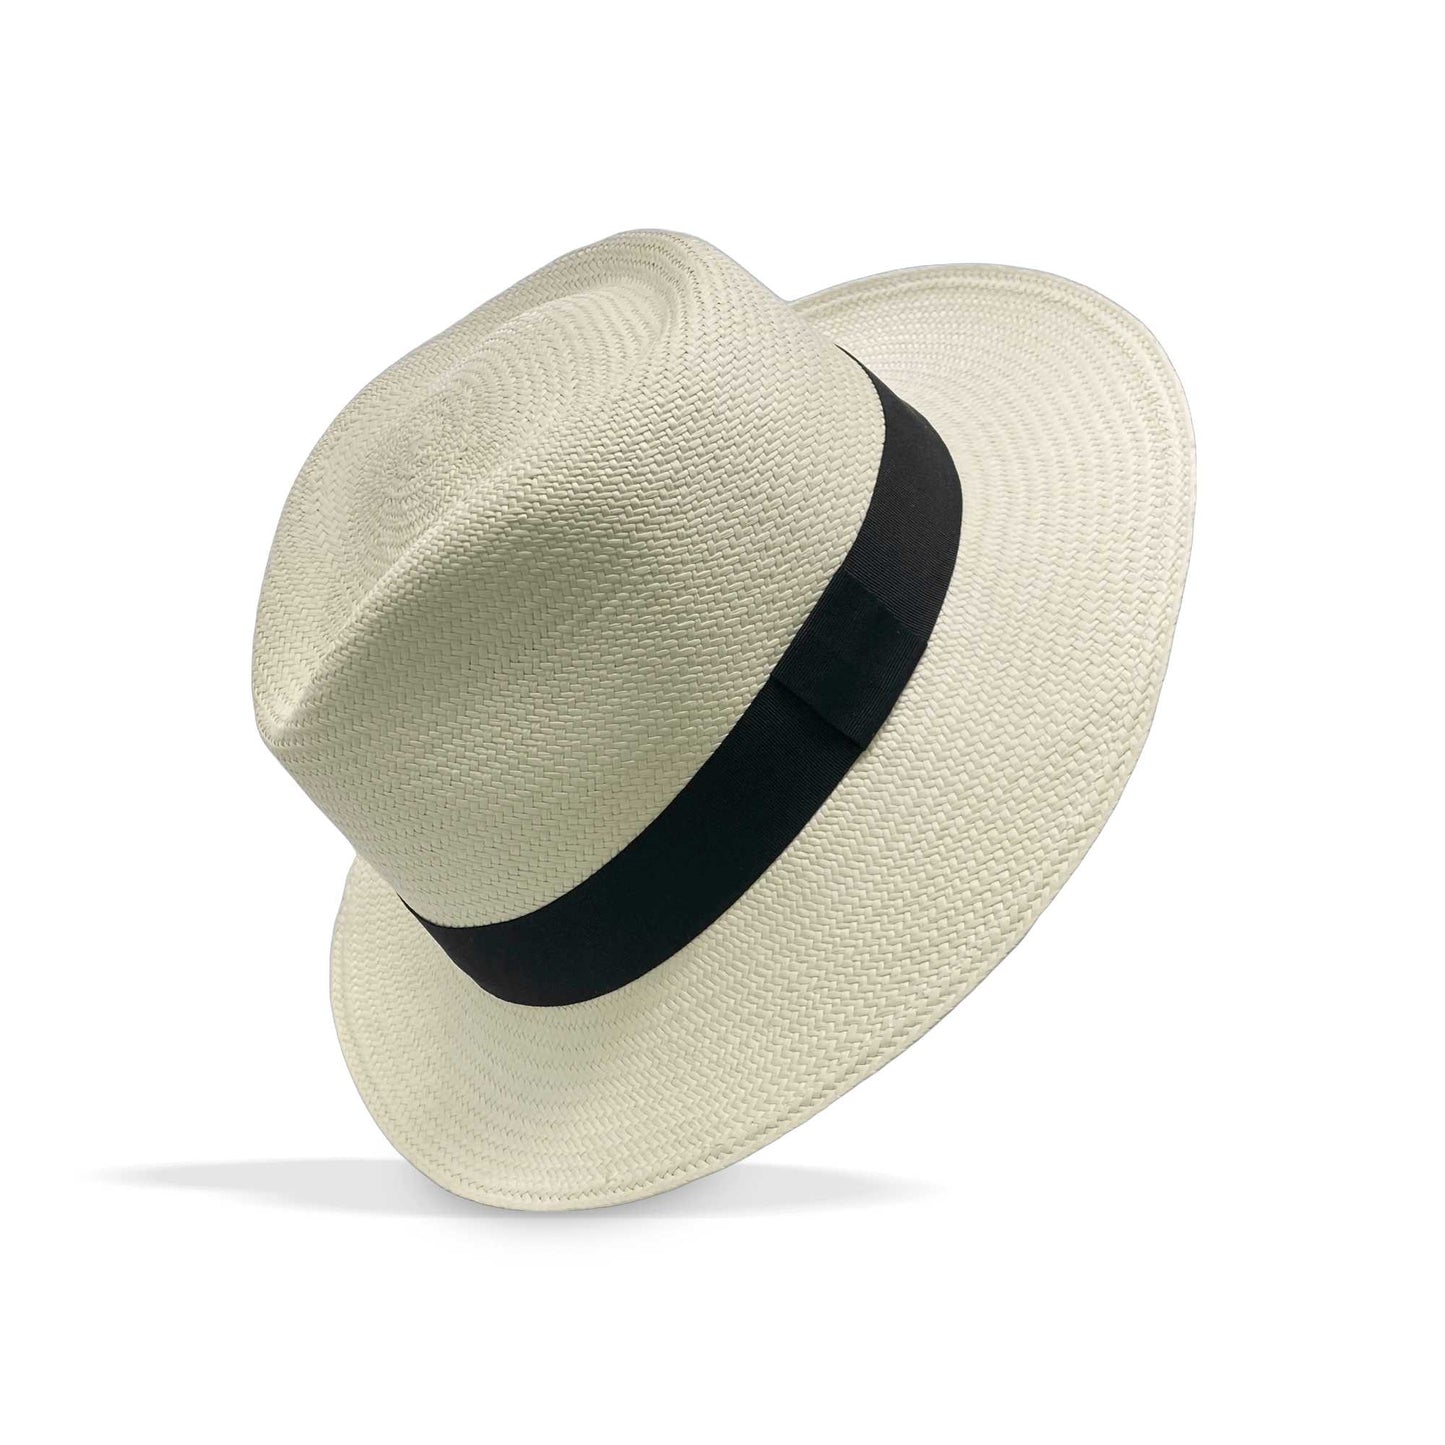 CALYPSO PANAMA STRAW HATS The Hip Hat